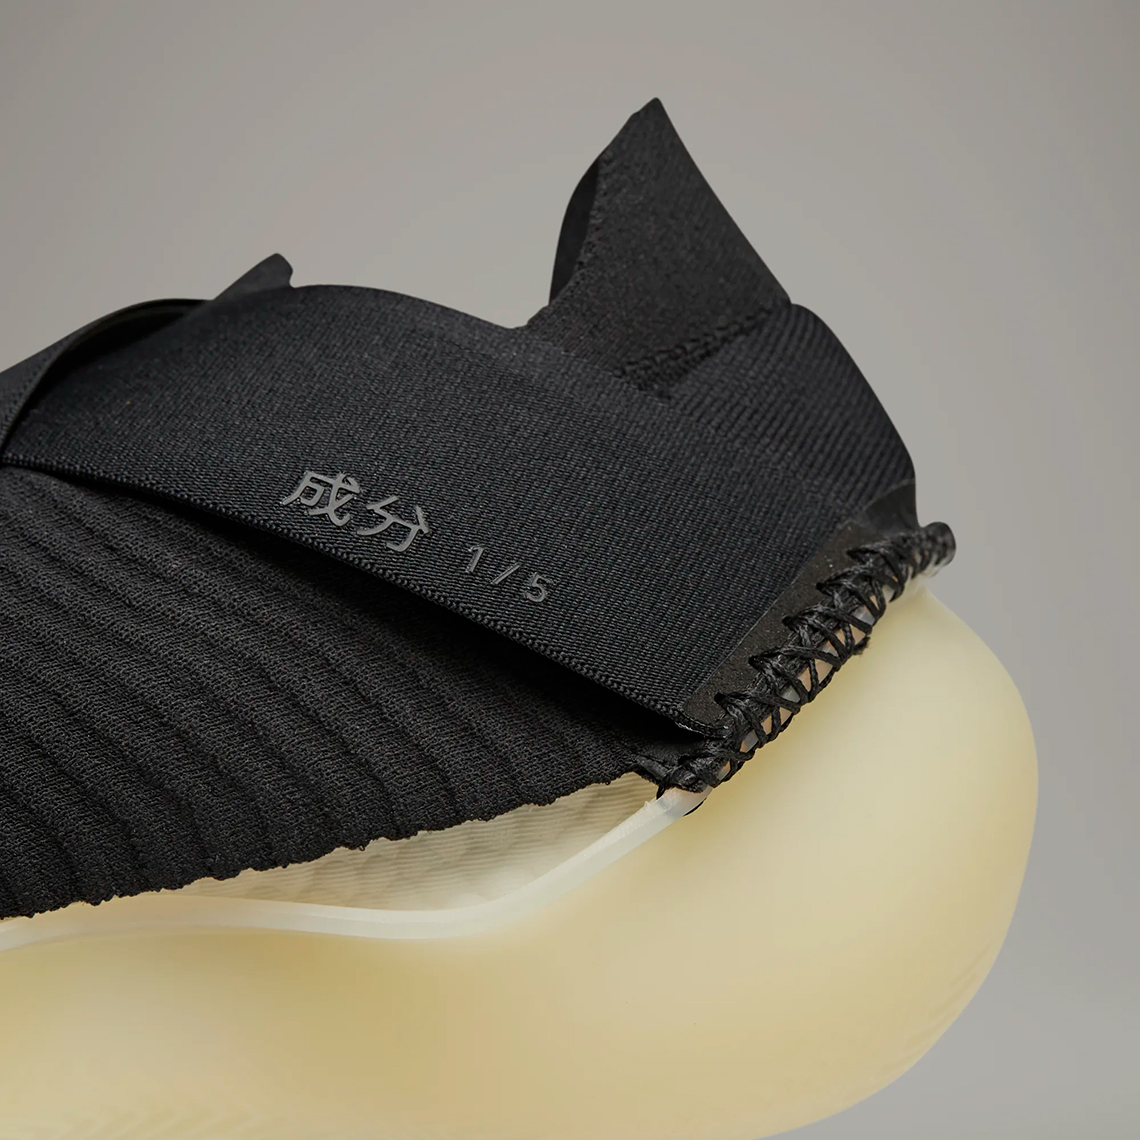 Adidas Voor Y 3 Iogo Black Black Cream White Id6841 7